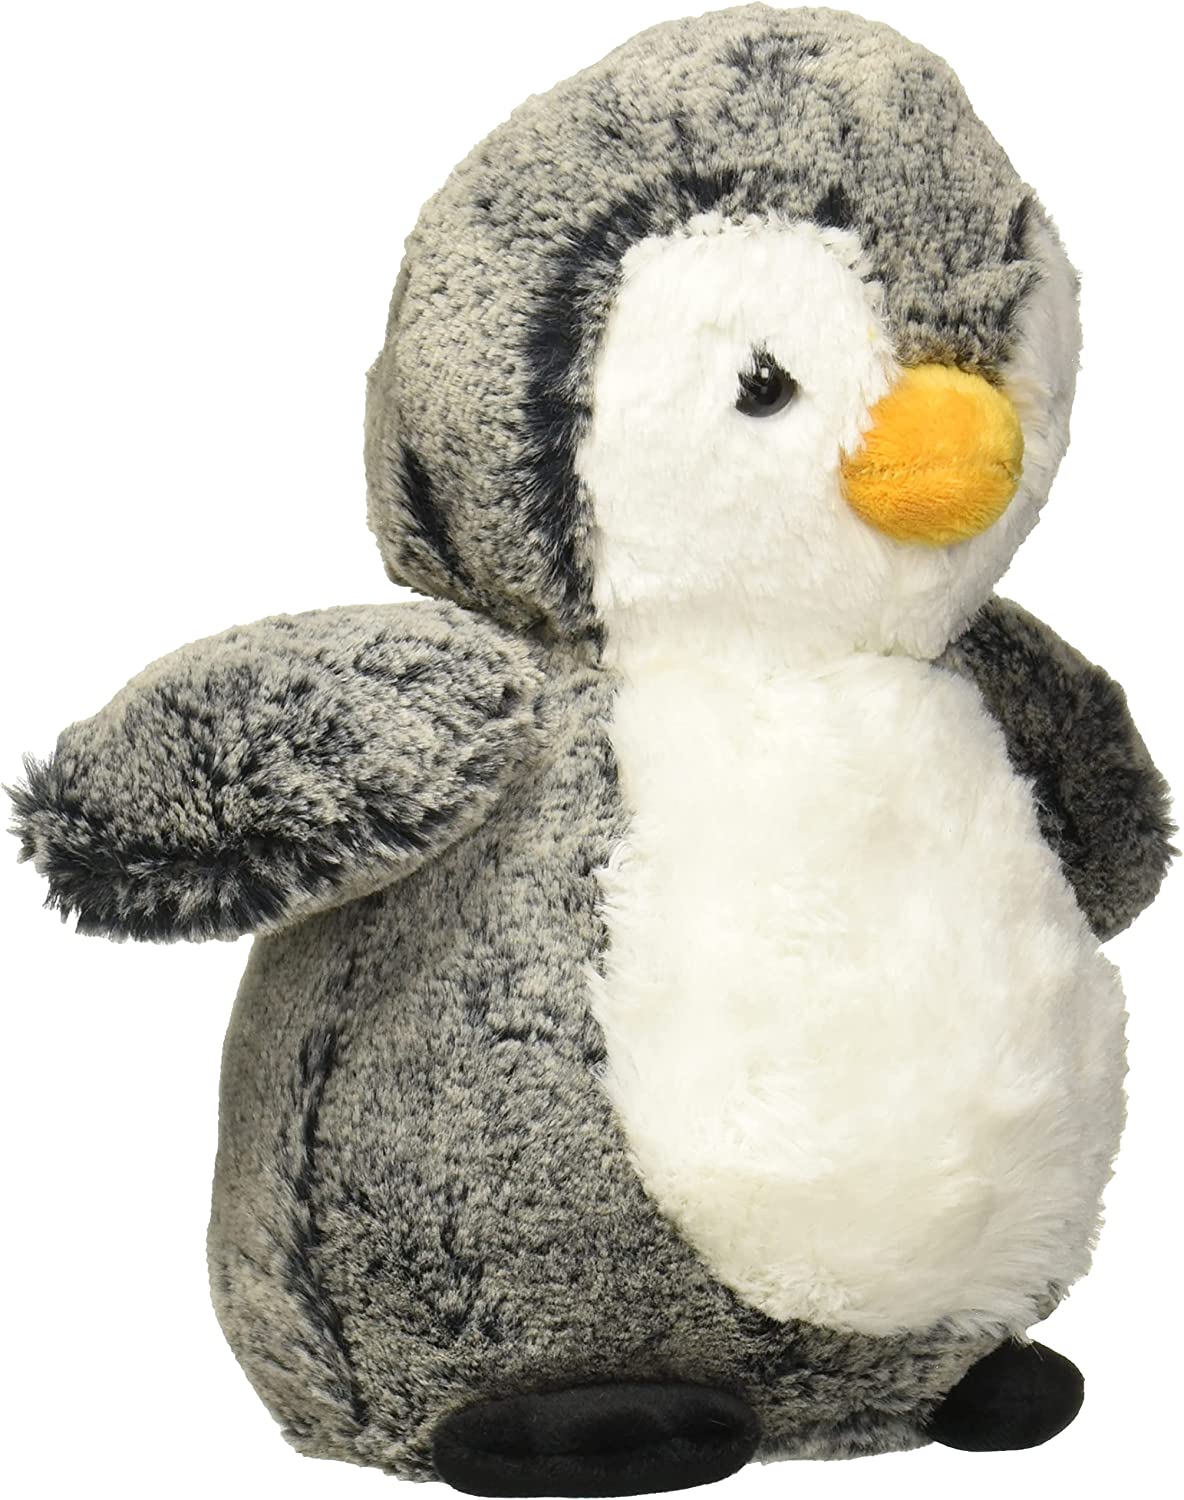 Aurora Plush Penguin Stuffed Animal, 9.5-Inch